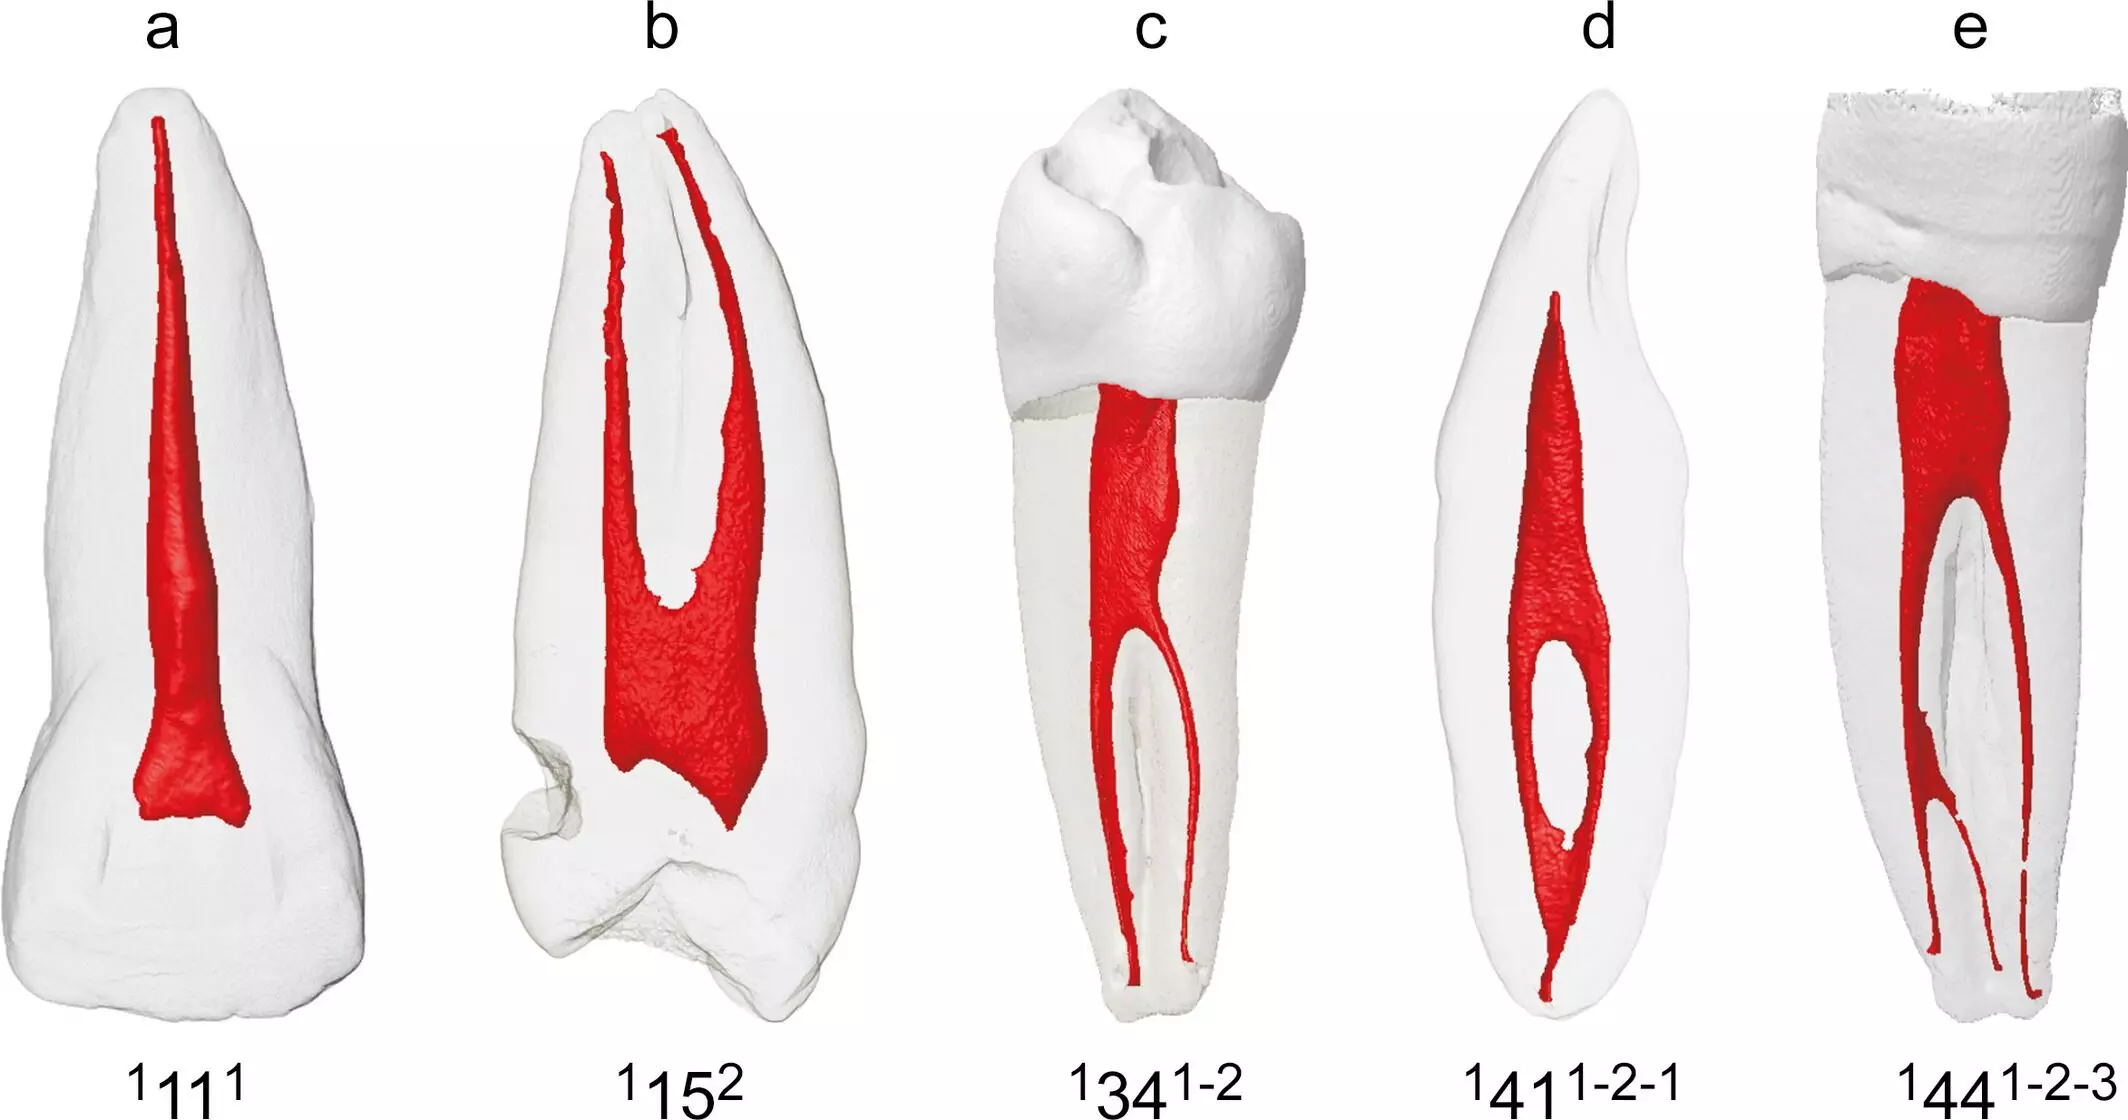 Root canal anatomy of mandibular incisors and mandibular canines varies by ethnicity: study